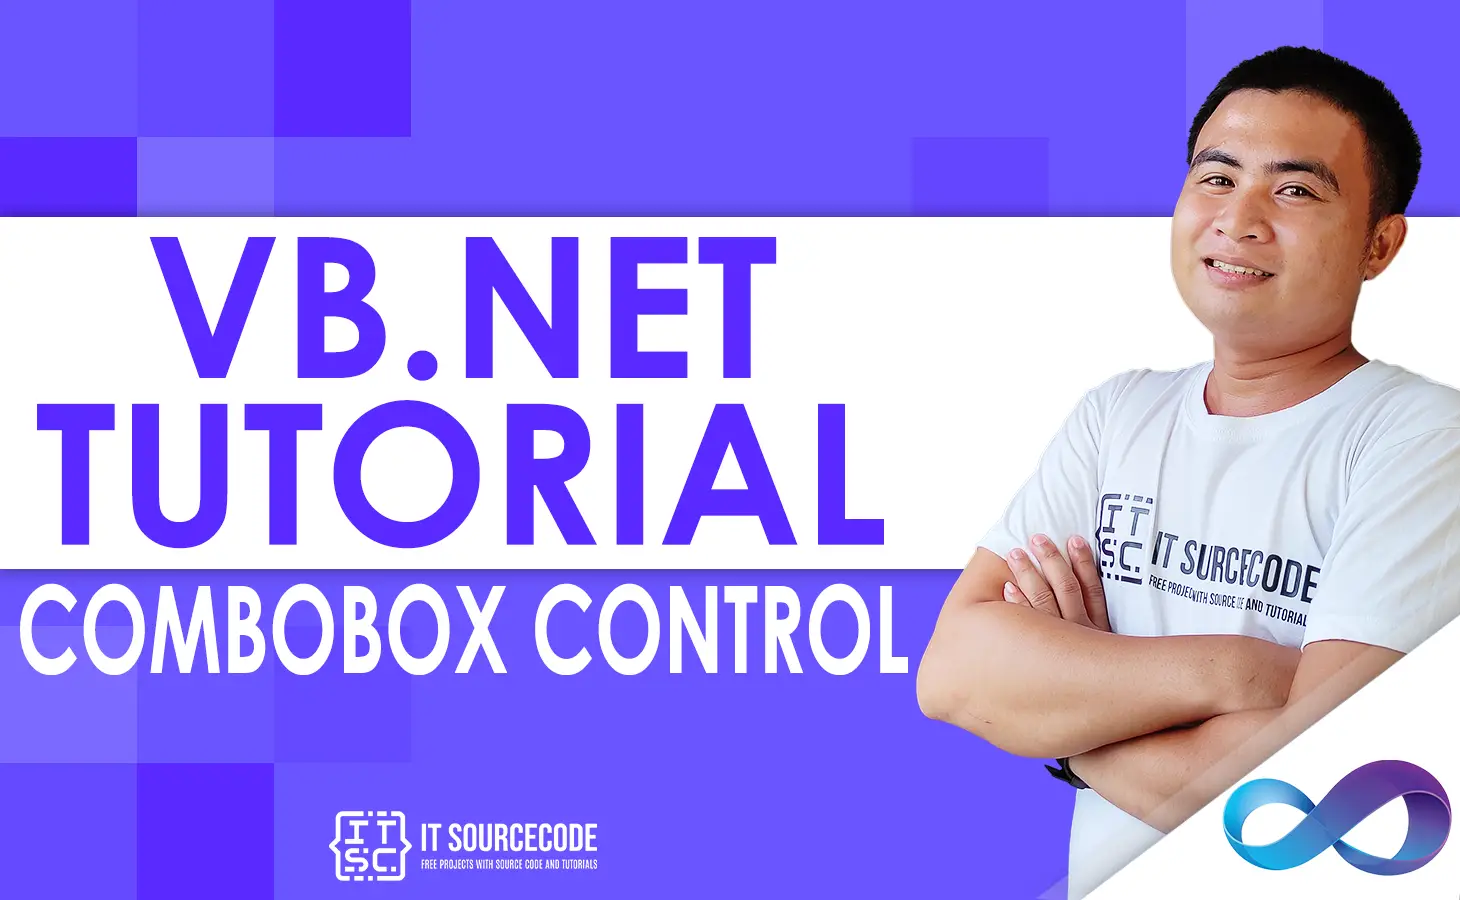 ComboBox Control in VB NET